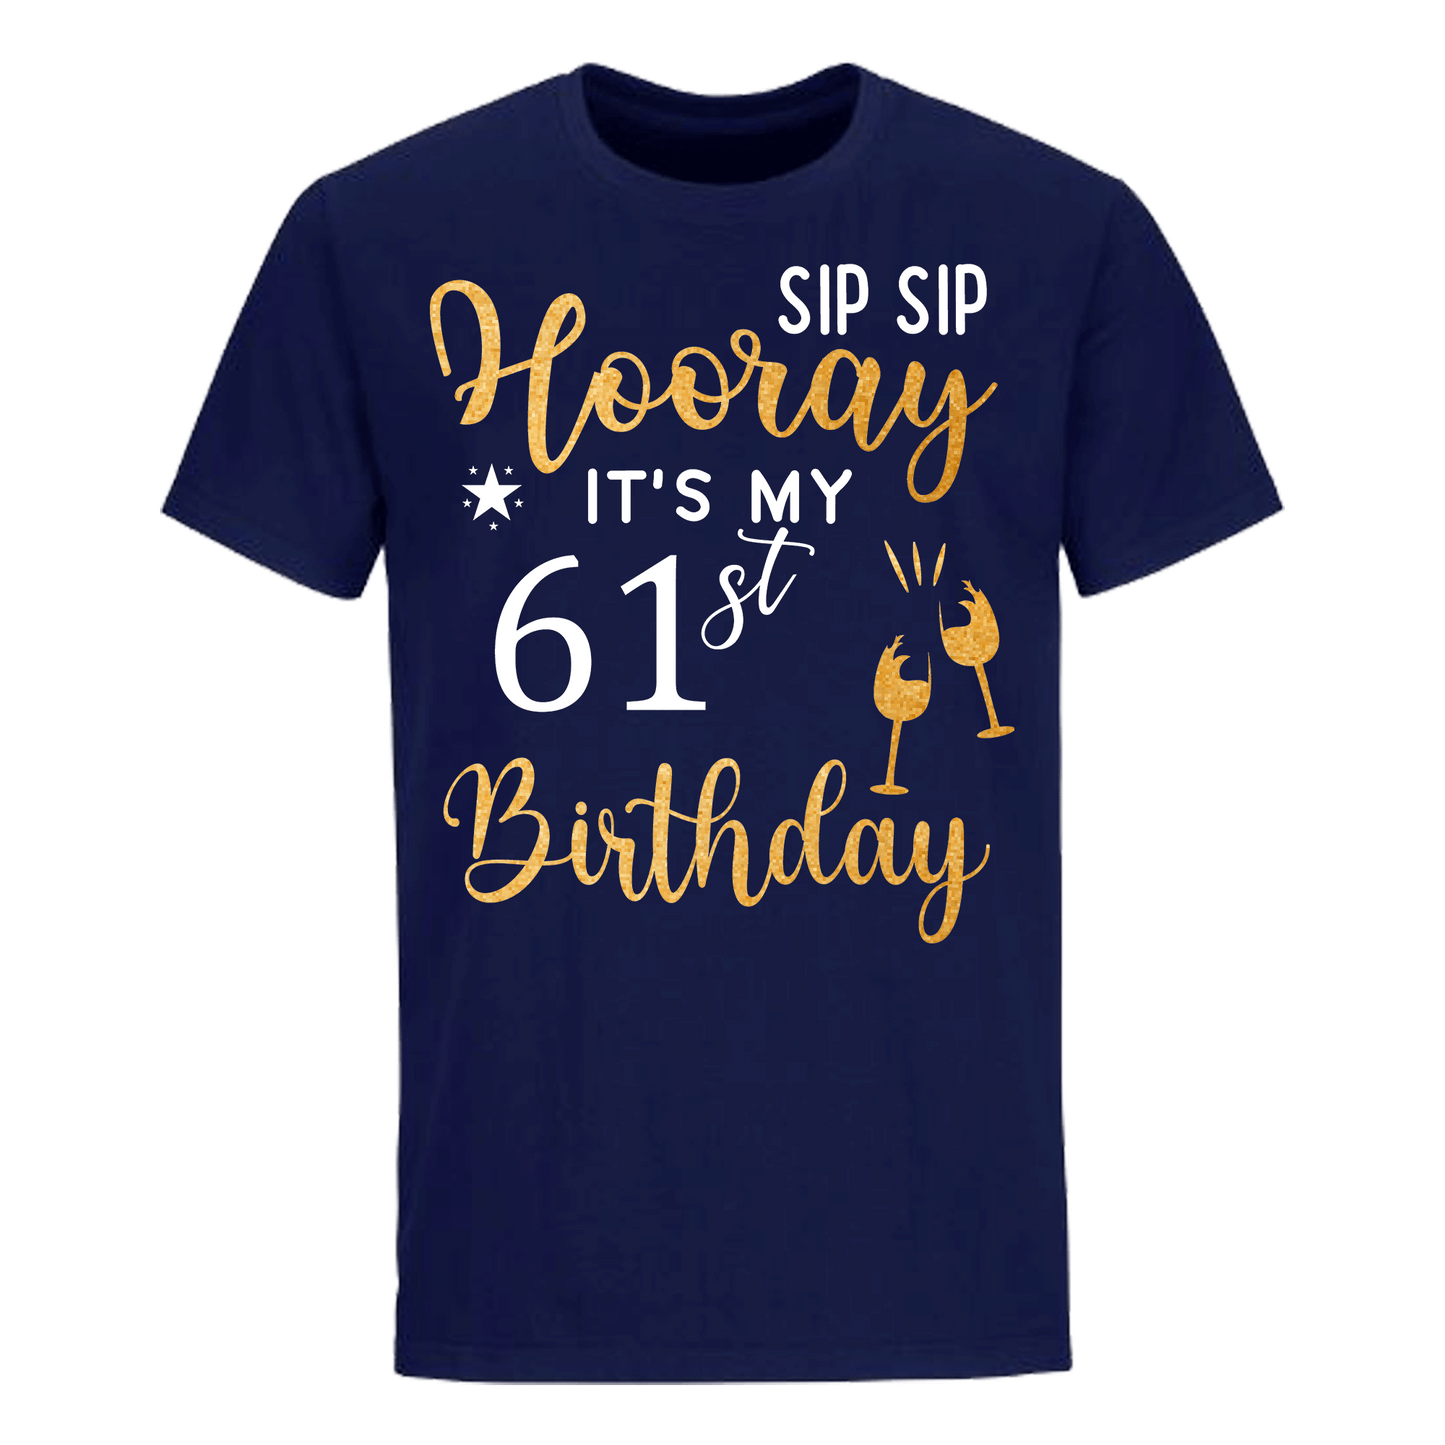 HOORAY IT'S MY 61th BIRTHDAY SHIRT'